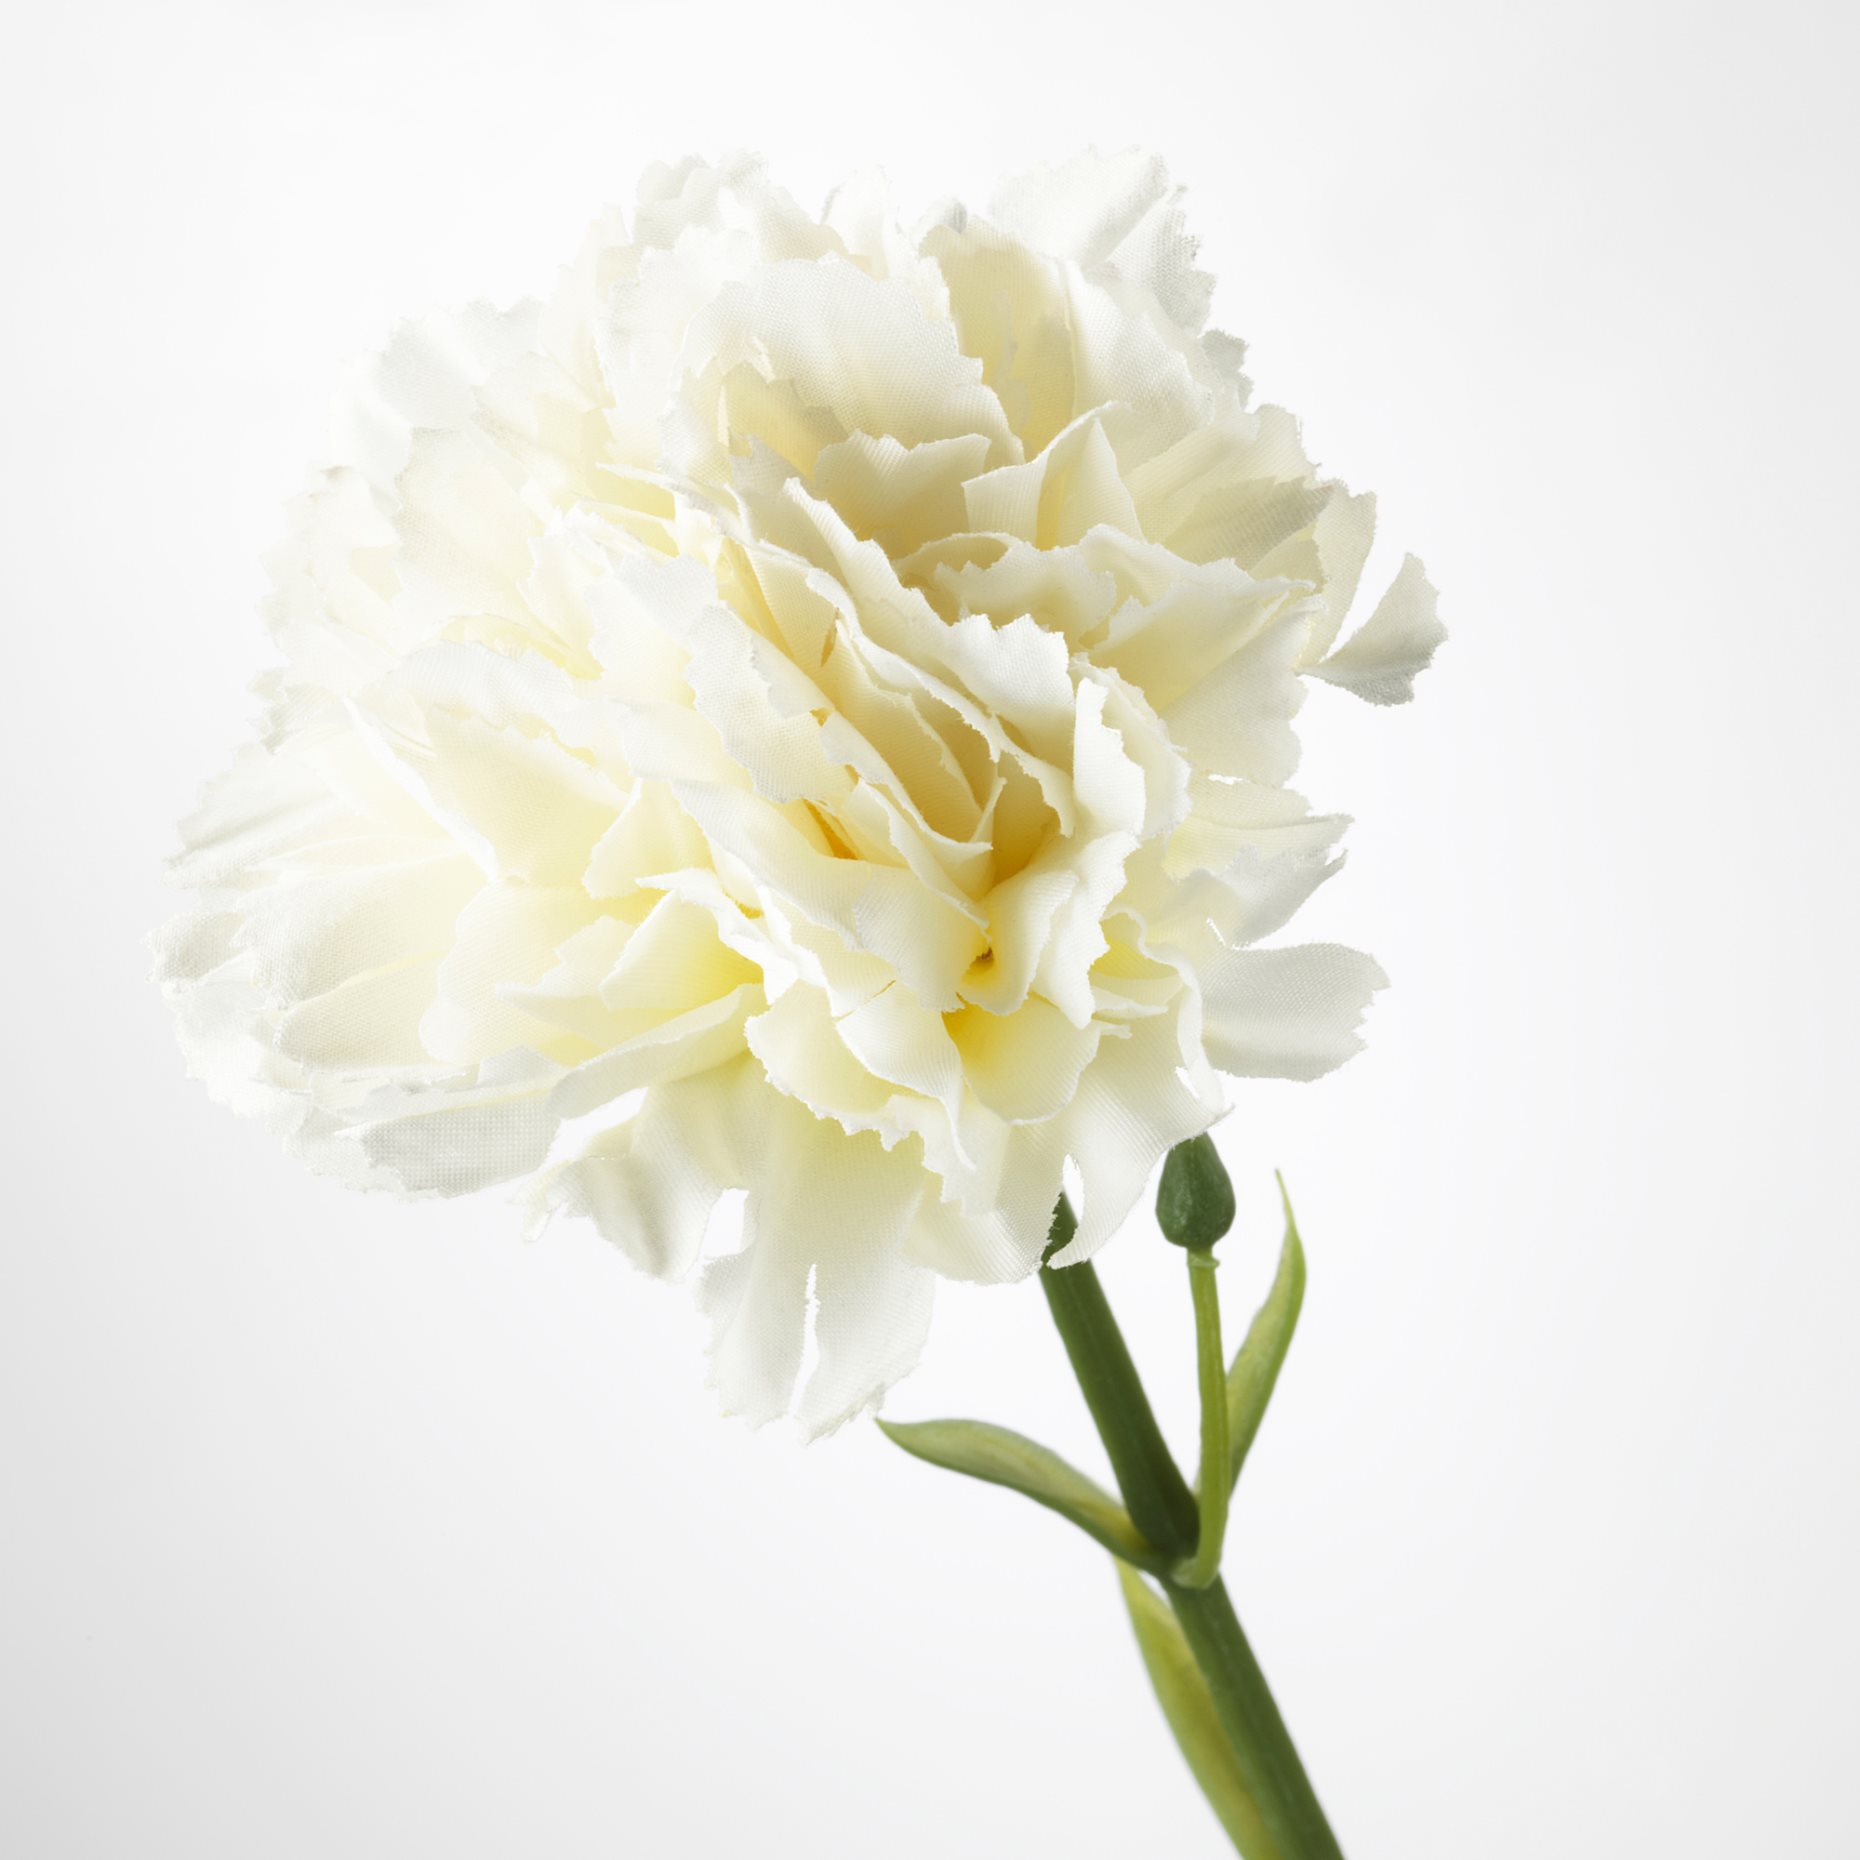 SMYCKA, τεχνητό λουλούδι, Γαρύφαλλο, 203.335.88